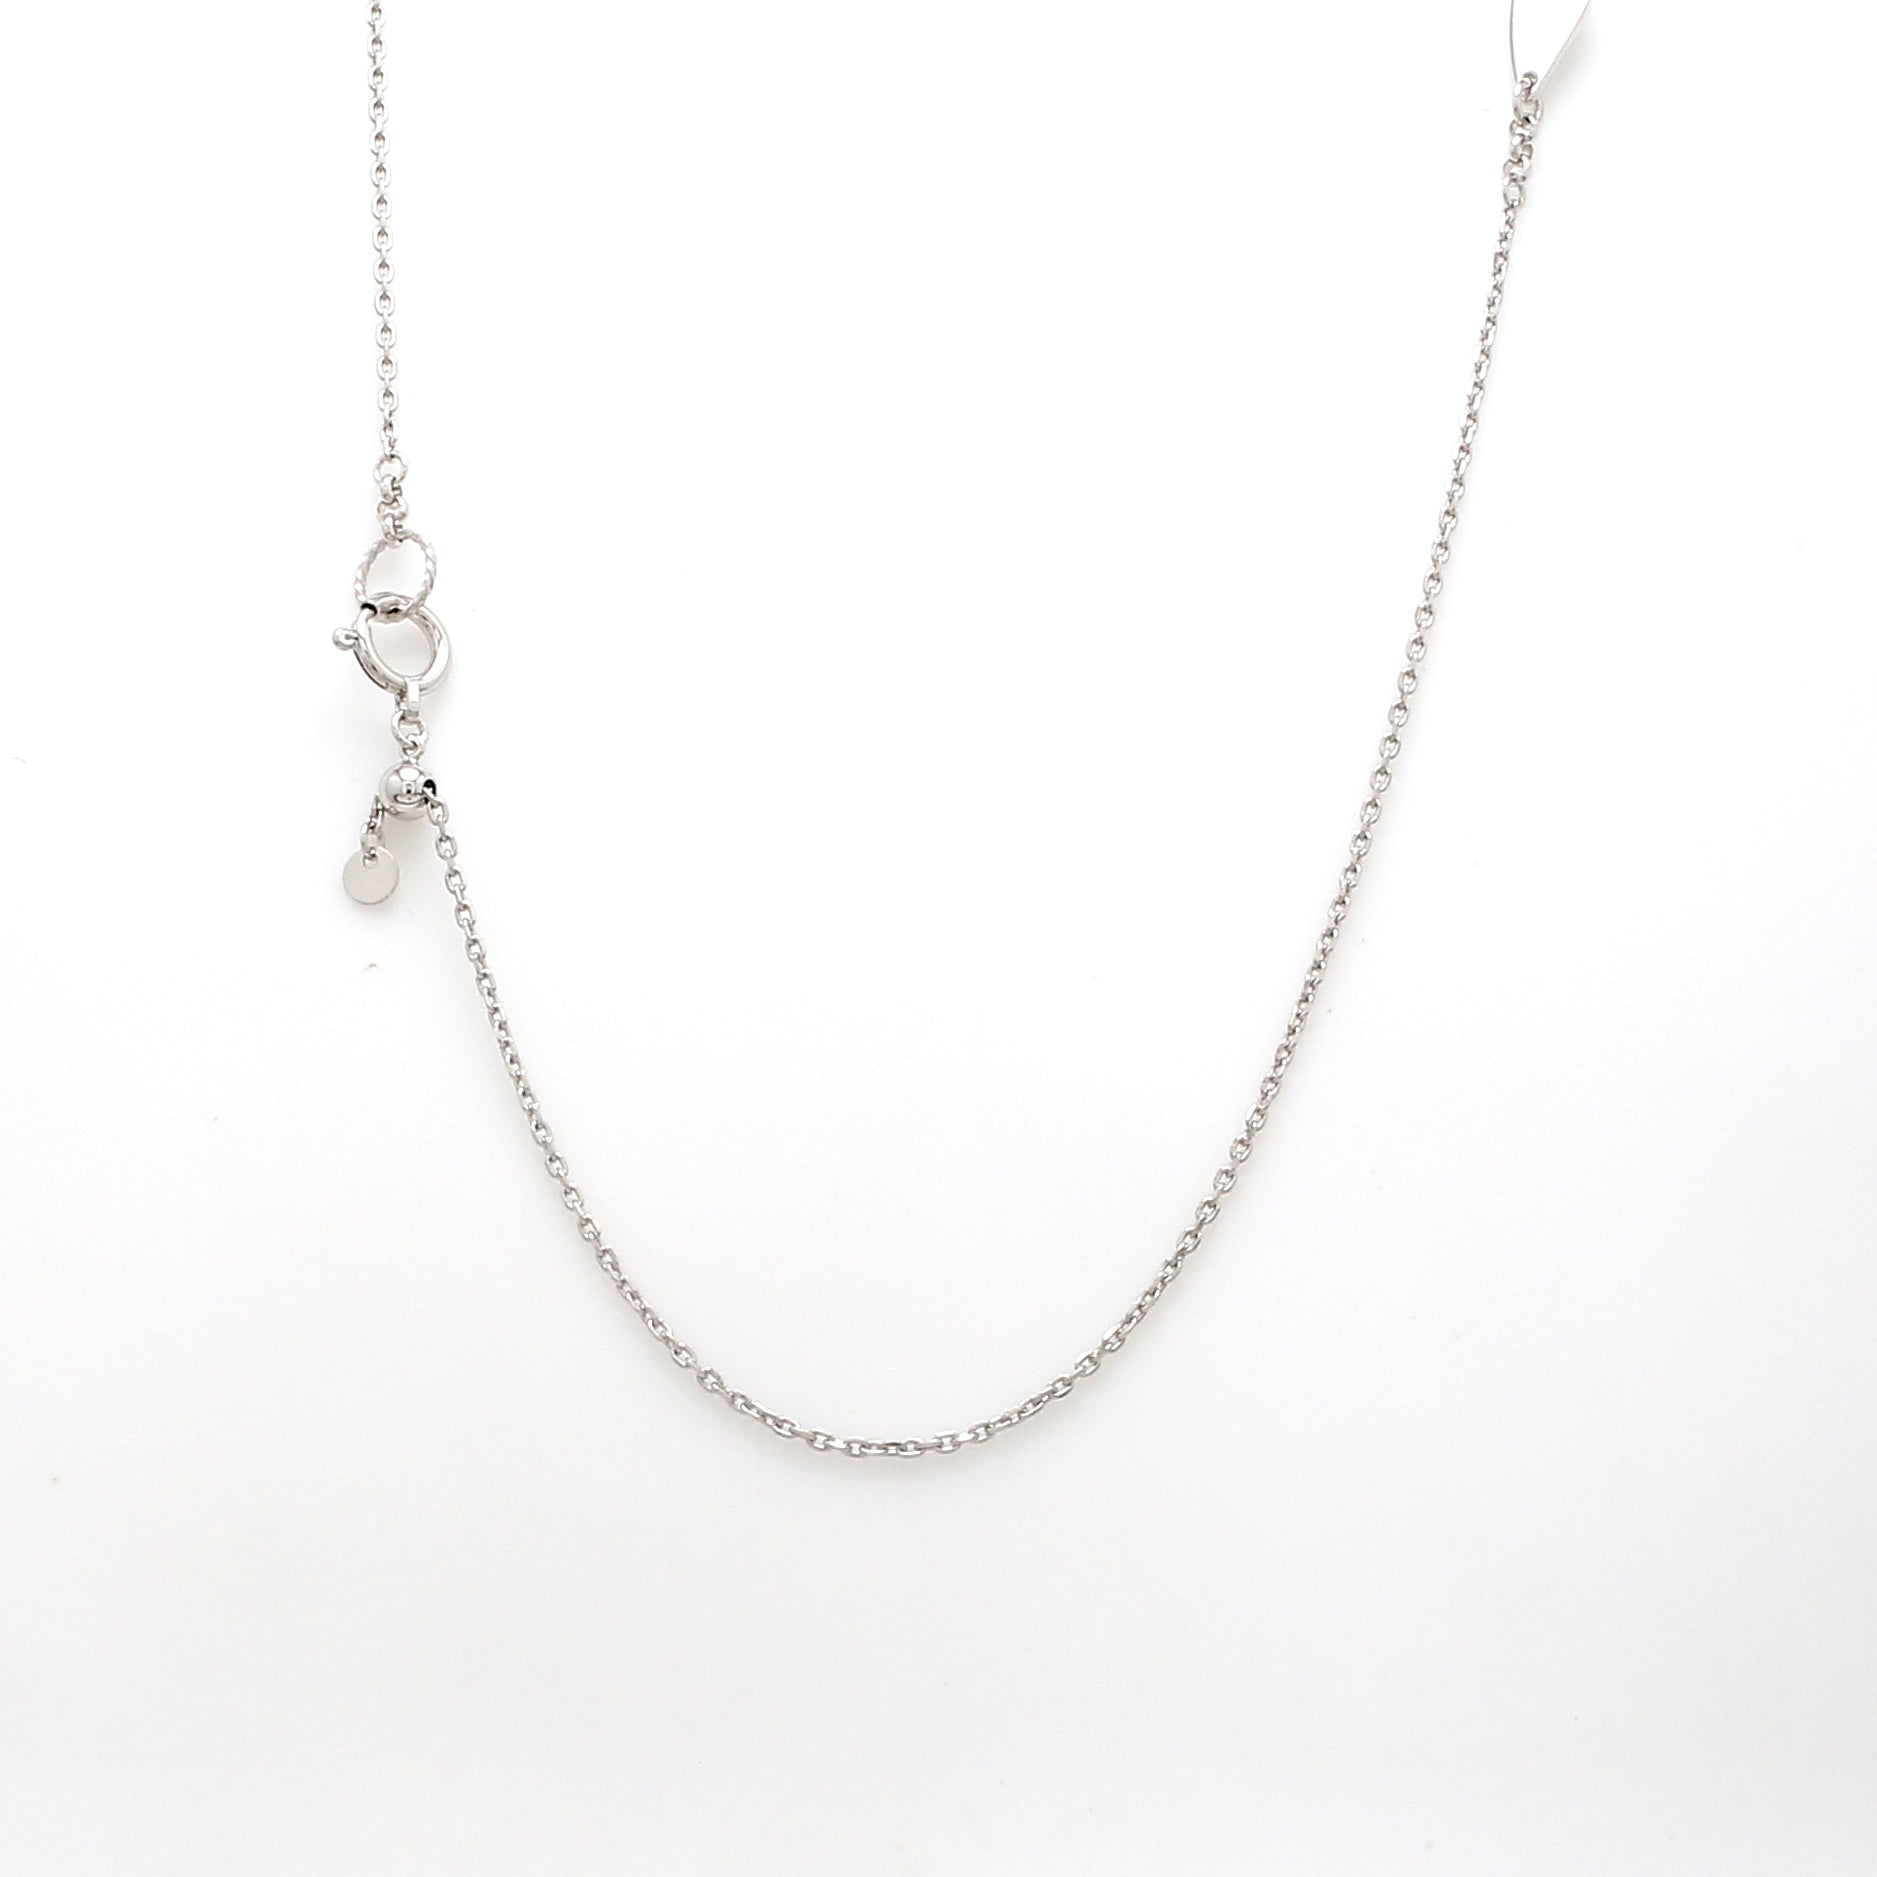 Japanese Platinum Necklace Chain for Women JL PT CH 1162